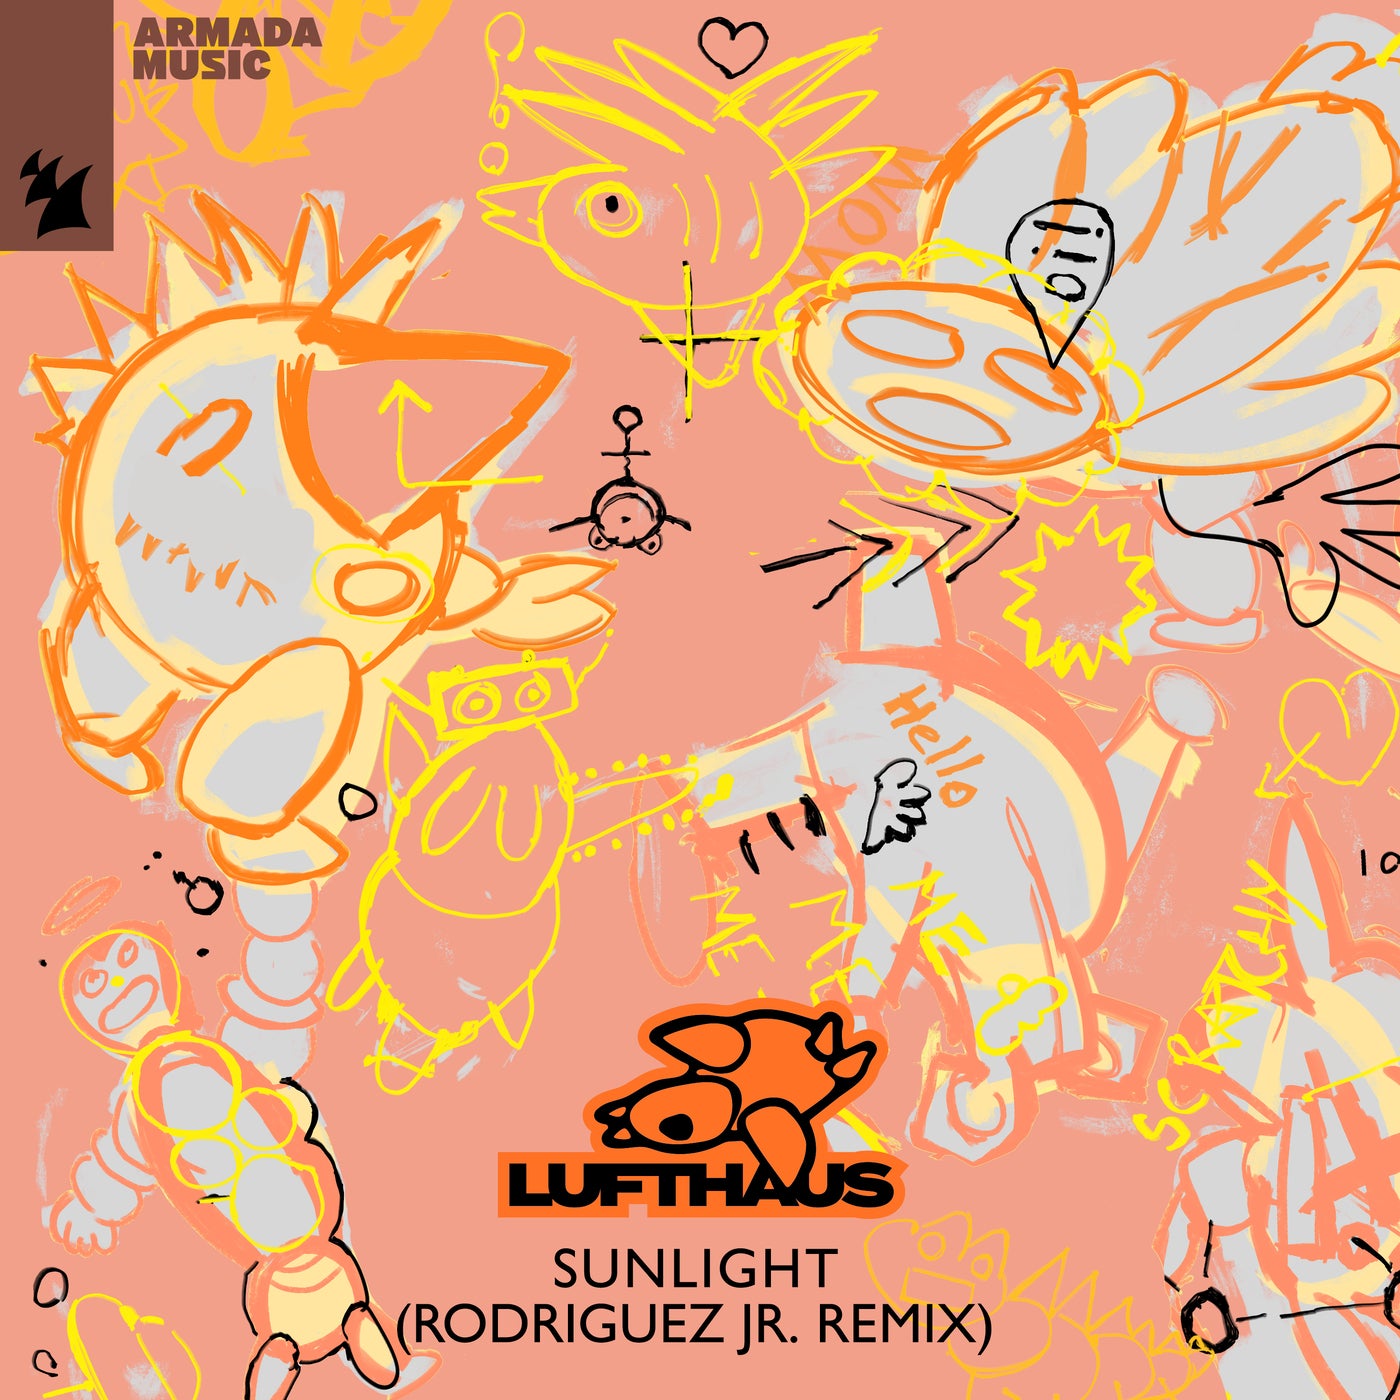 image cover: Lufthaus - Sunlight - Rodriguez Jr. Remix on Armada Music